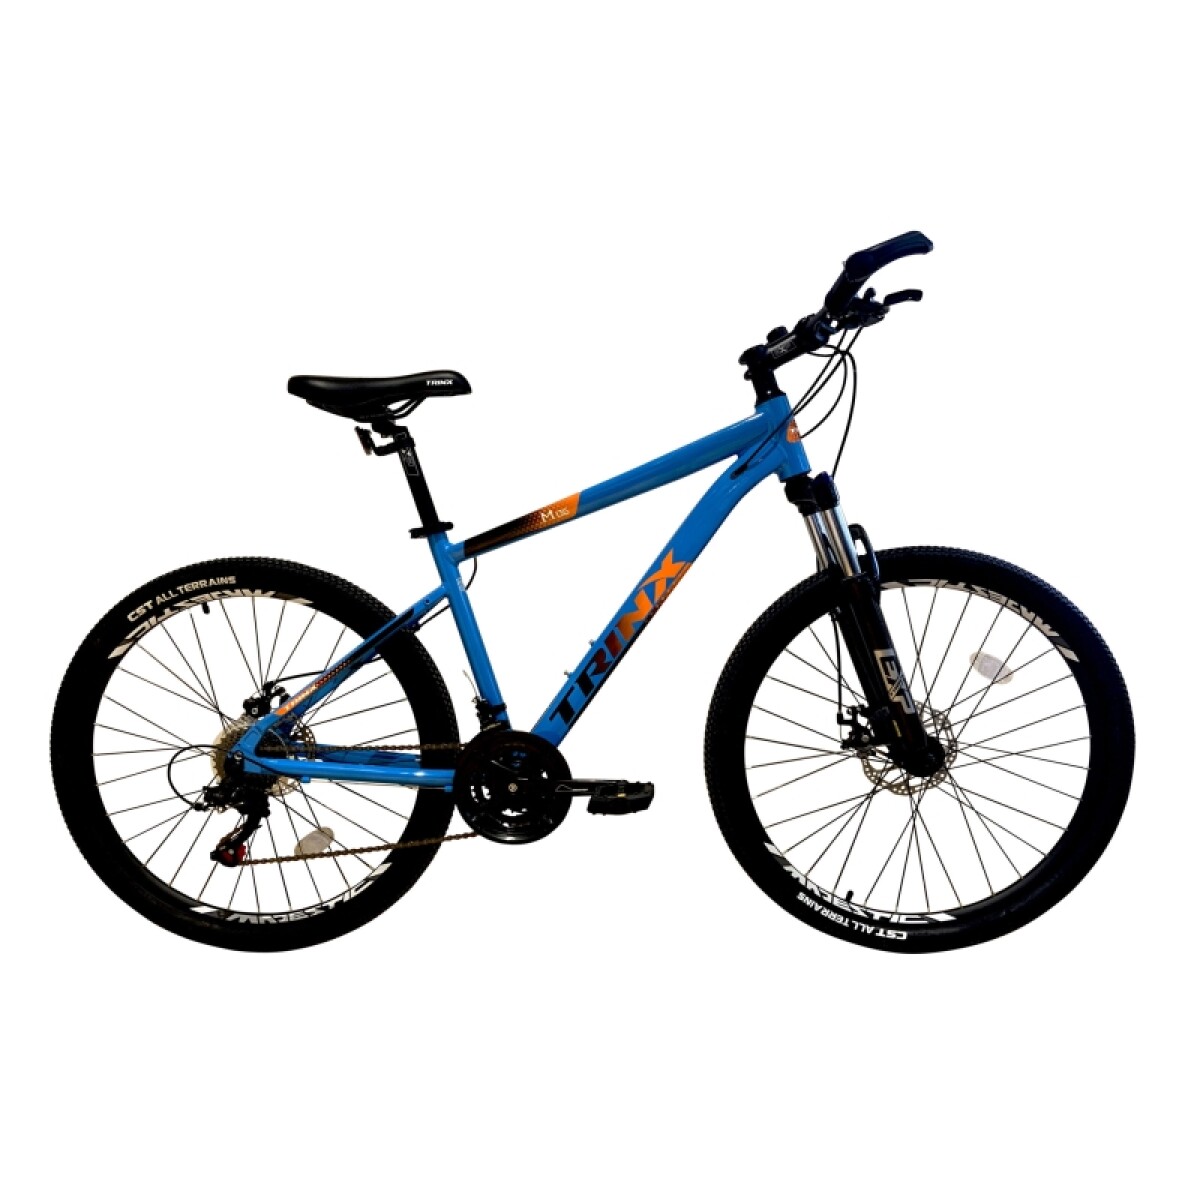 Bicicleta Trinx Mtb R.26 M136 (con Bloqueo) - Azul 